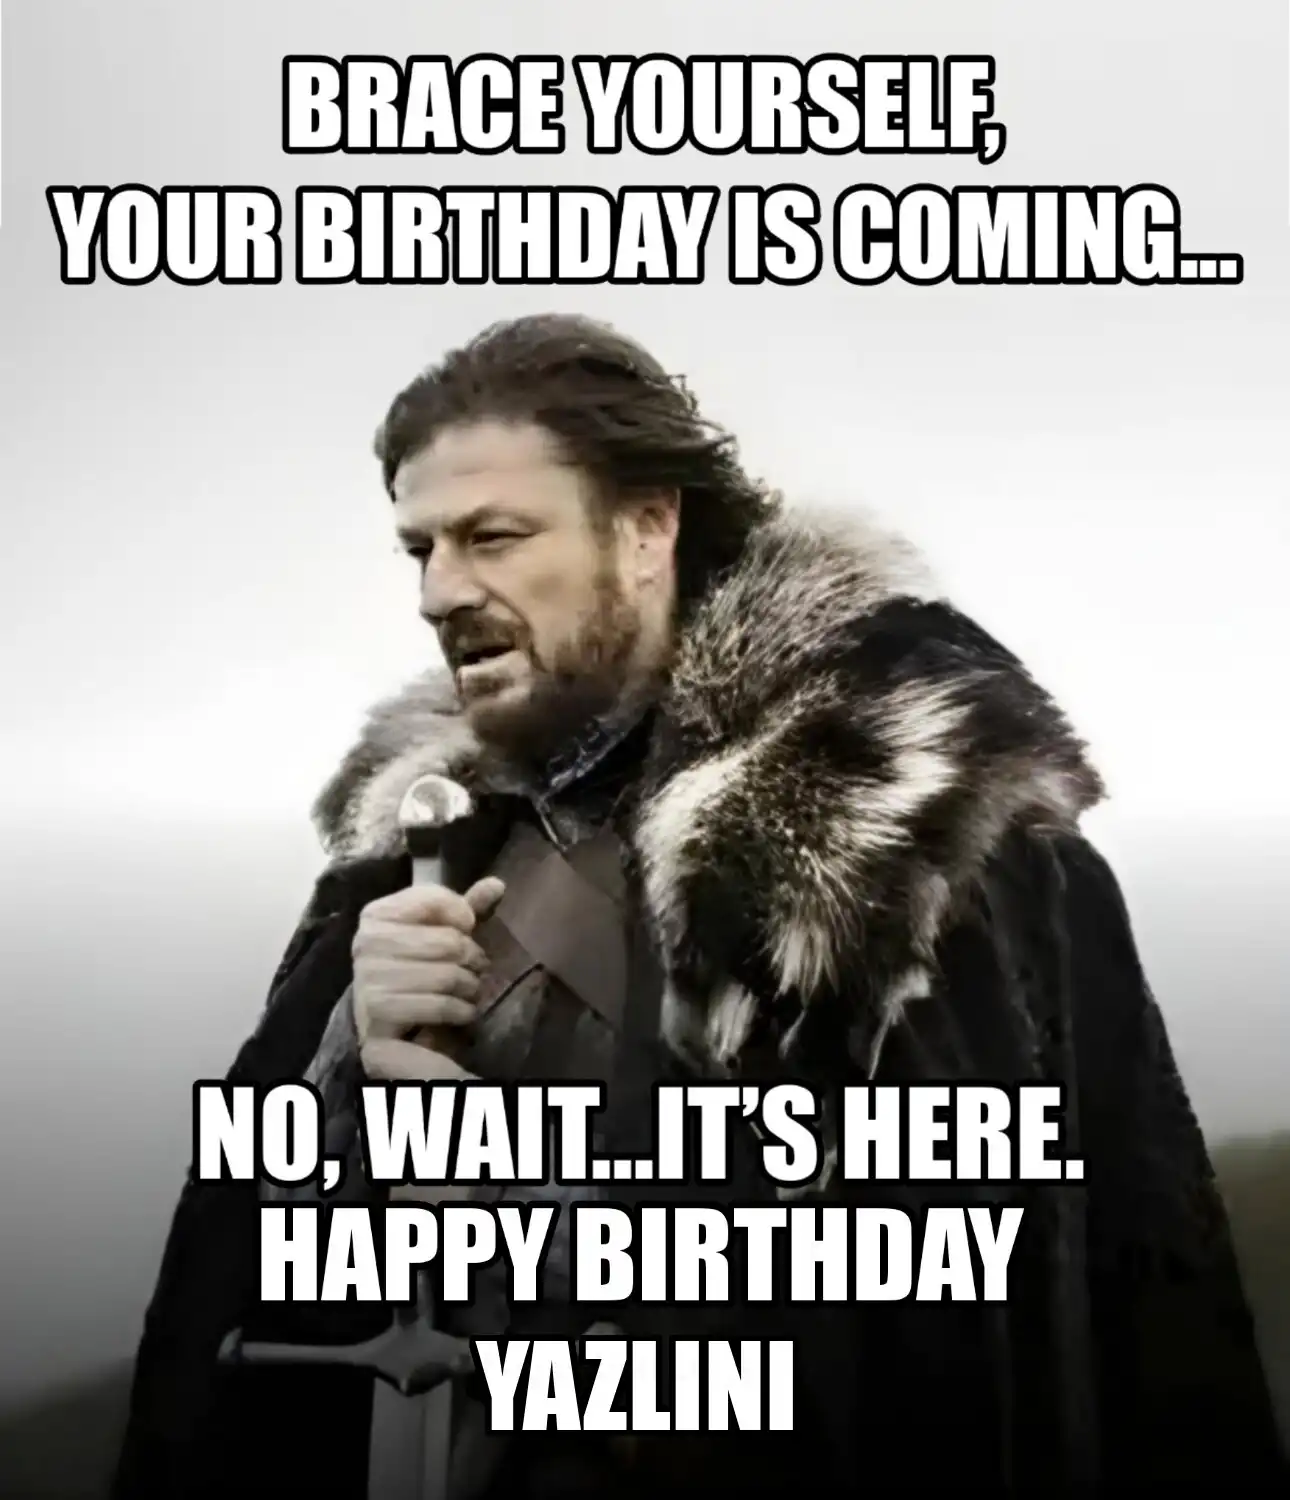 Happy Birthday Yazlini Brace Yourself Your Birthday Is Coming Meme